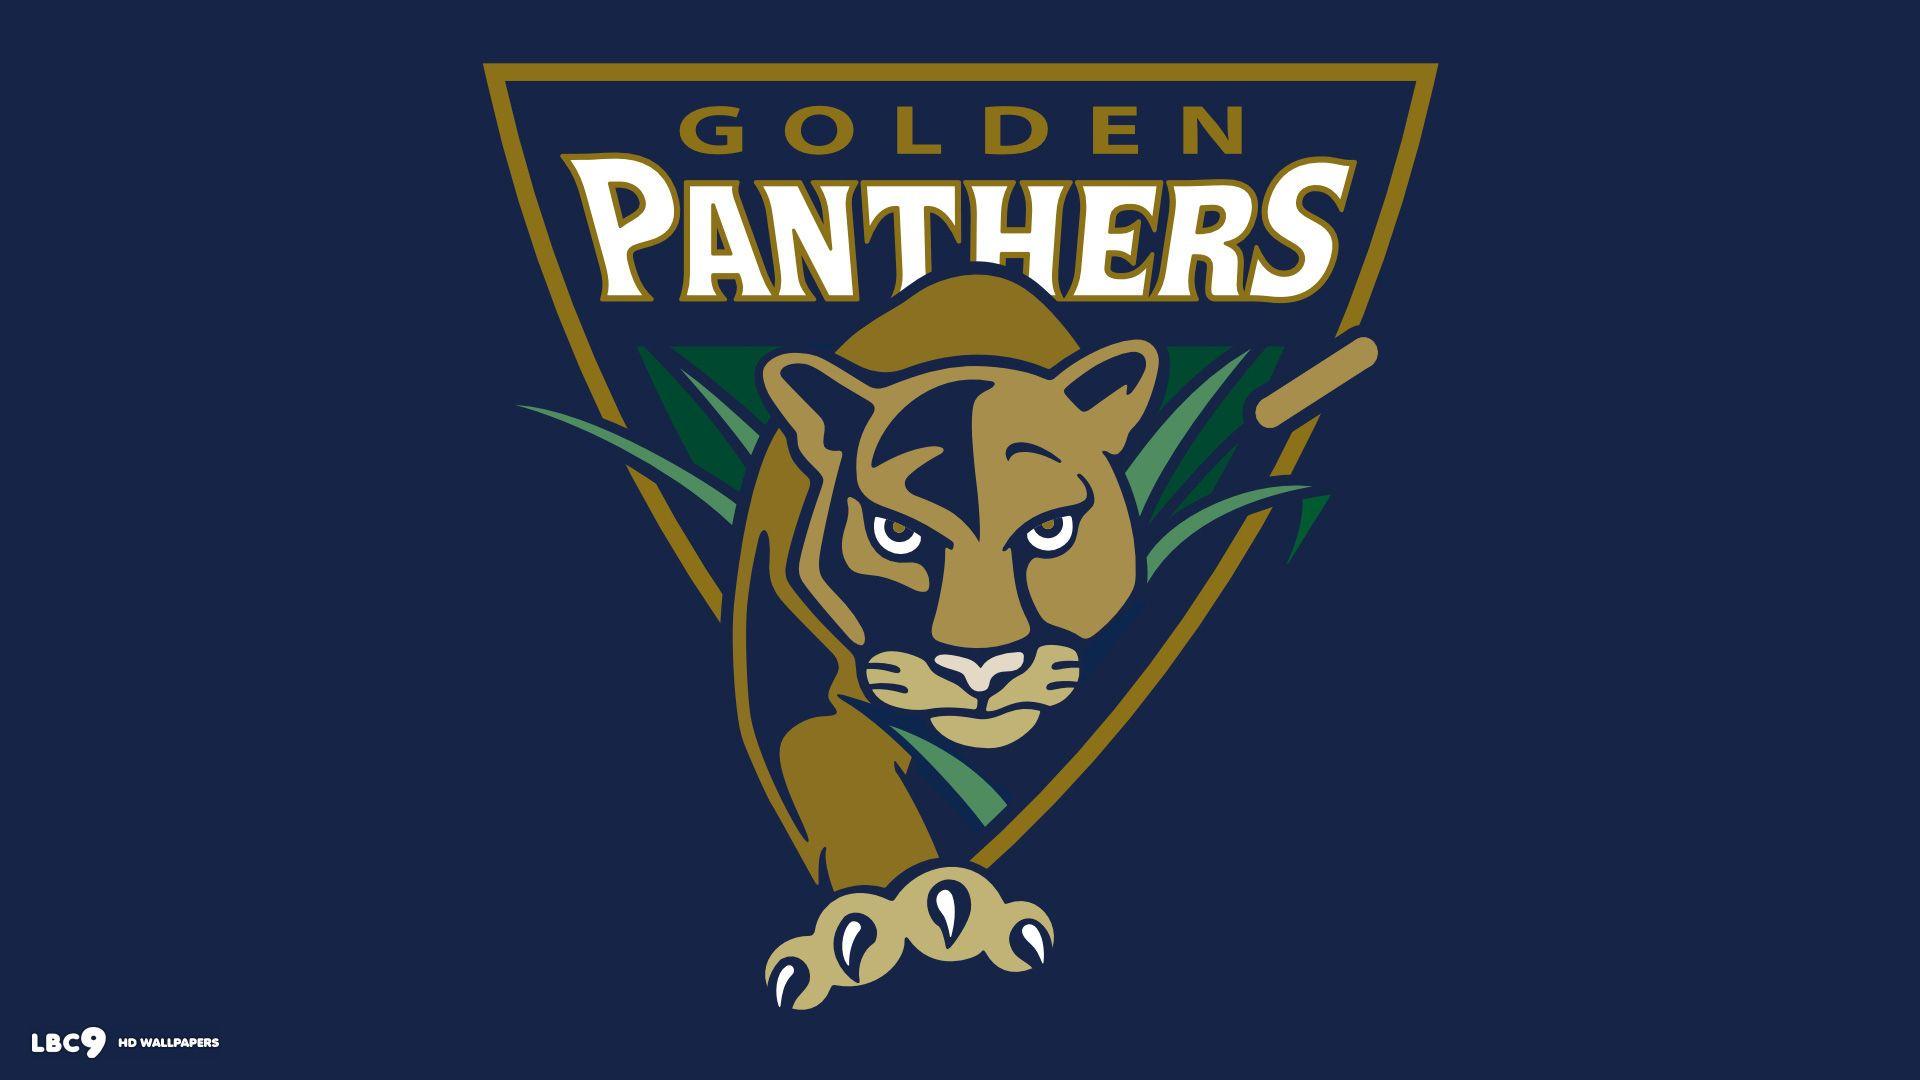 Gold Panther Logo - Golden panthers Logos